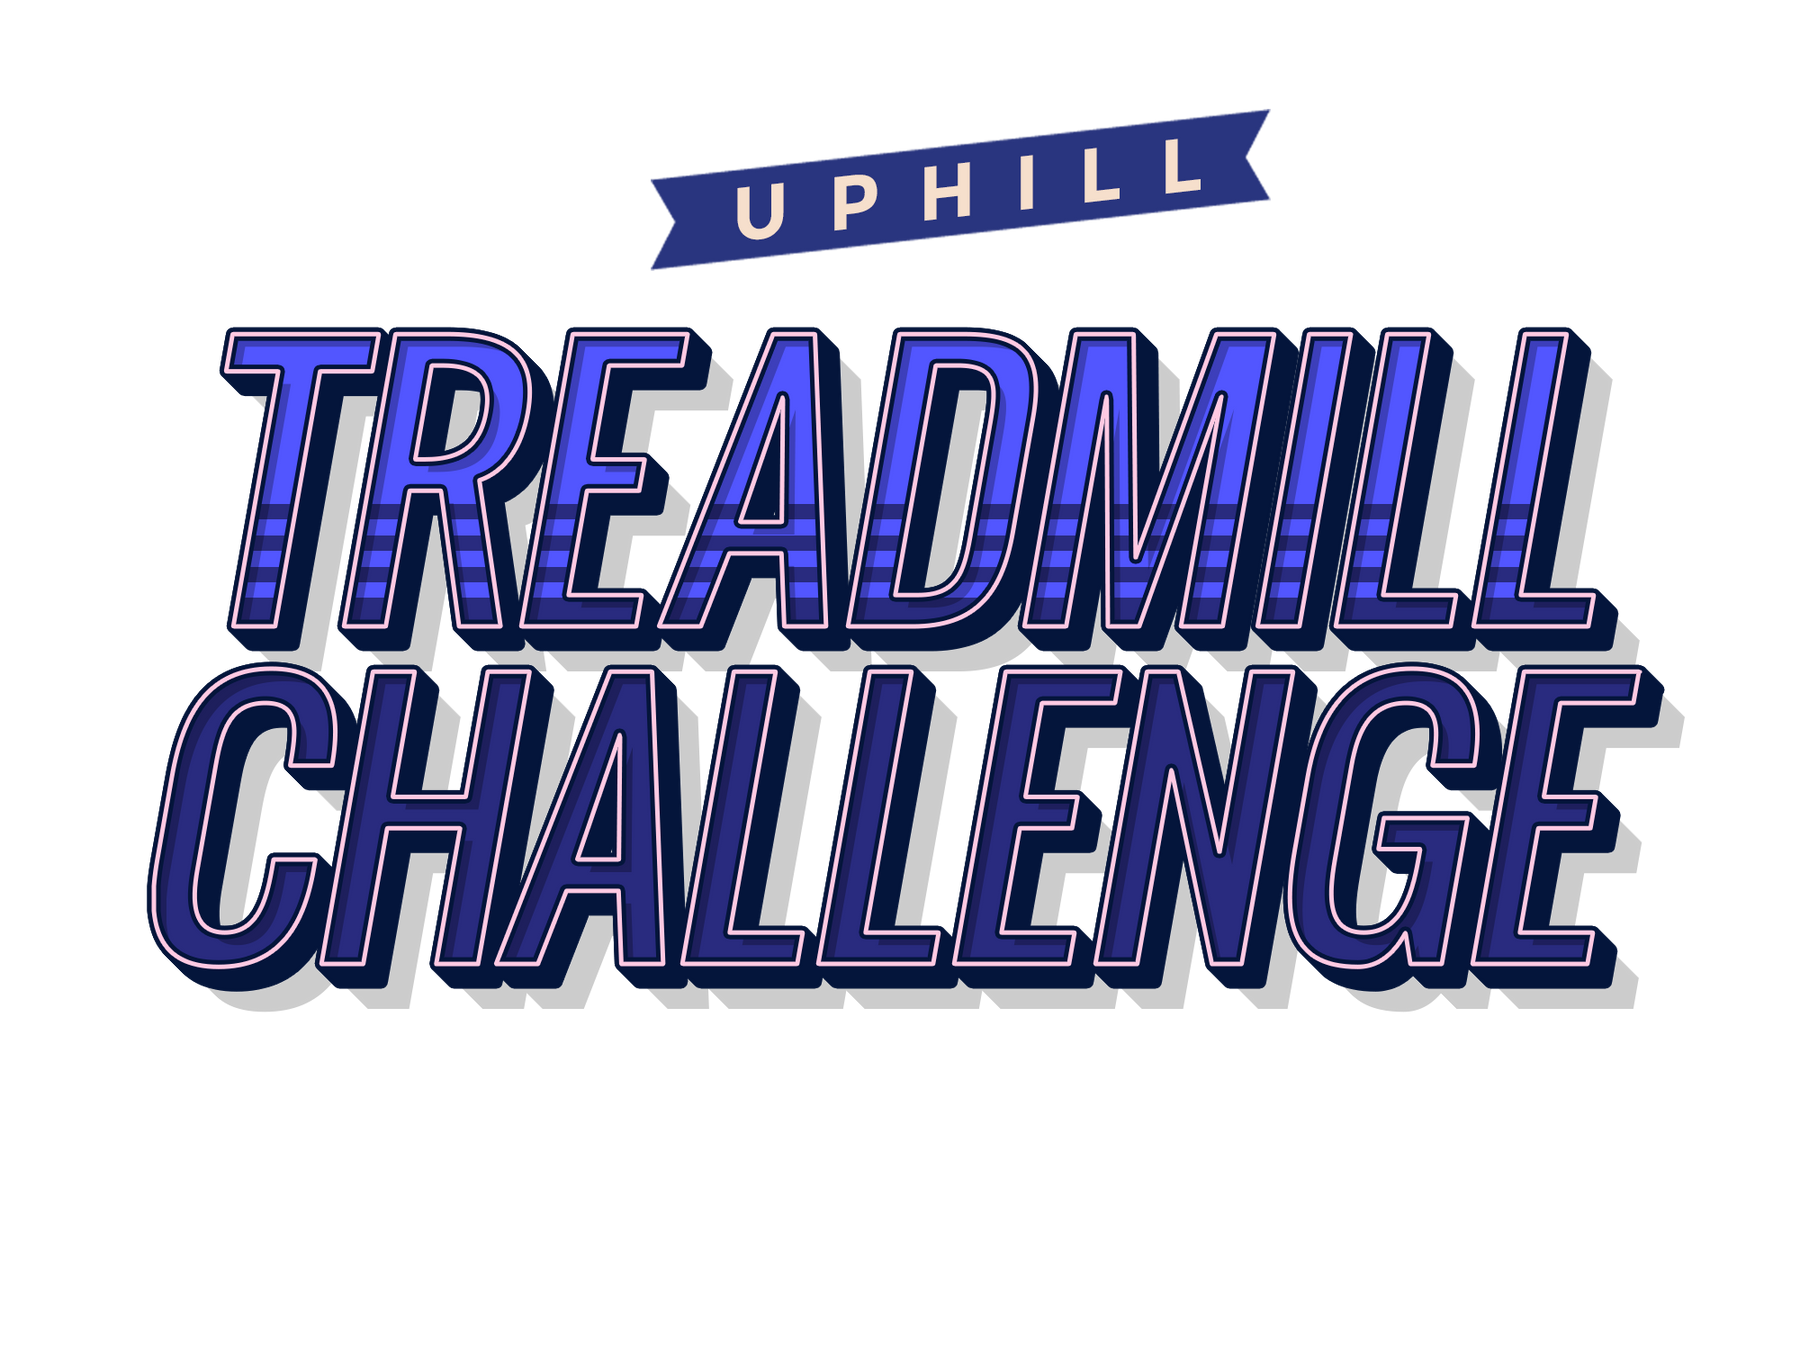 Uphill Treadmill Challenge is Back